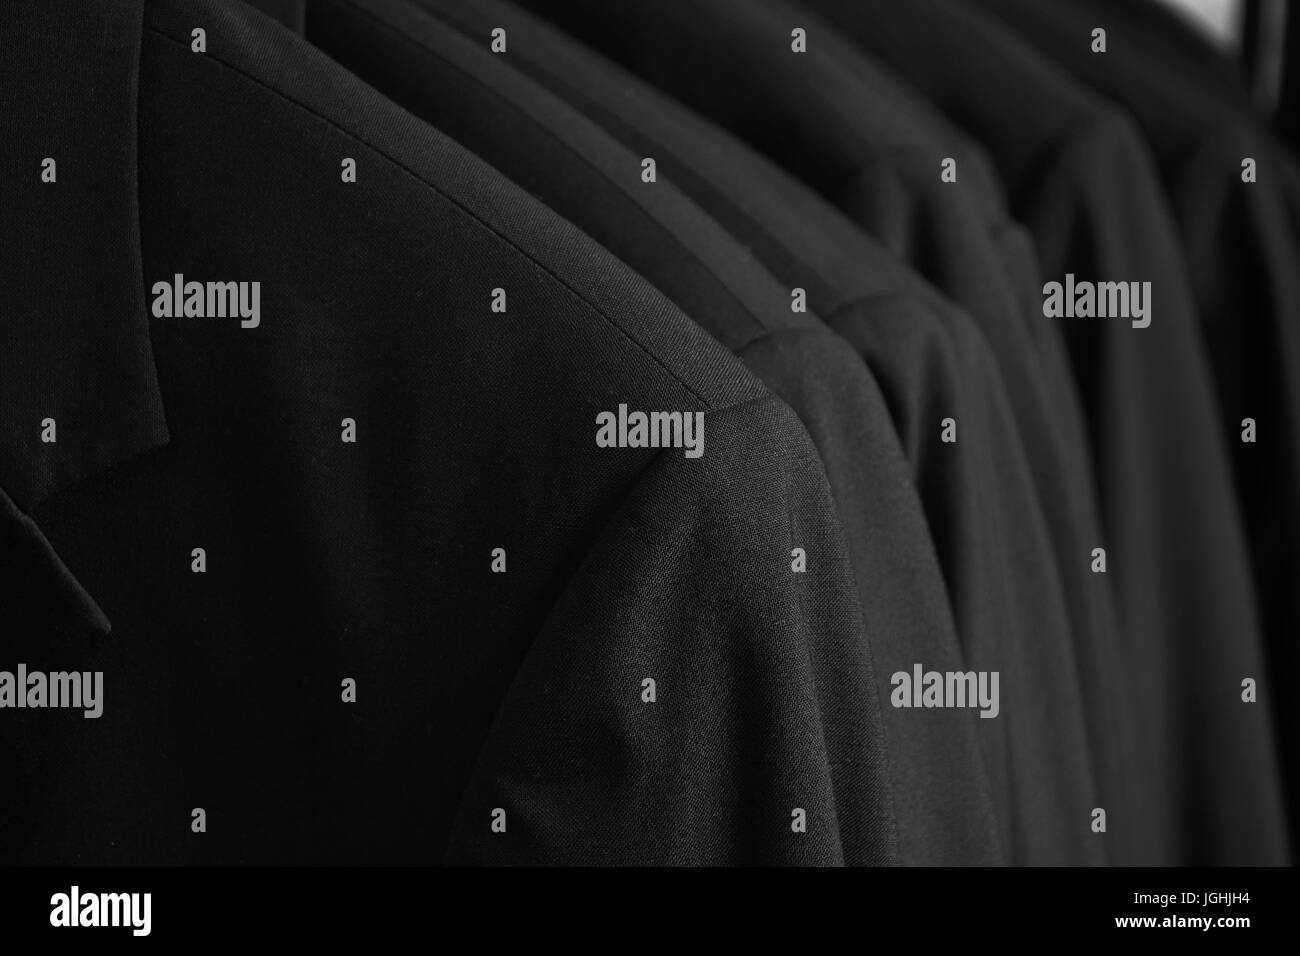 row of black tuxedo dinner jackets hanging in closet Stock Photo